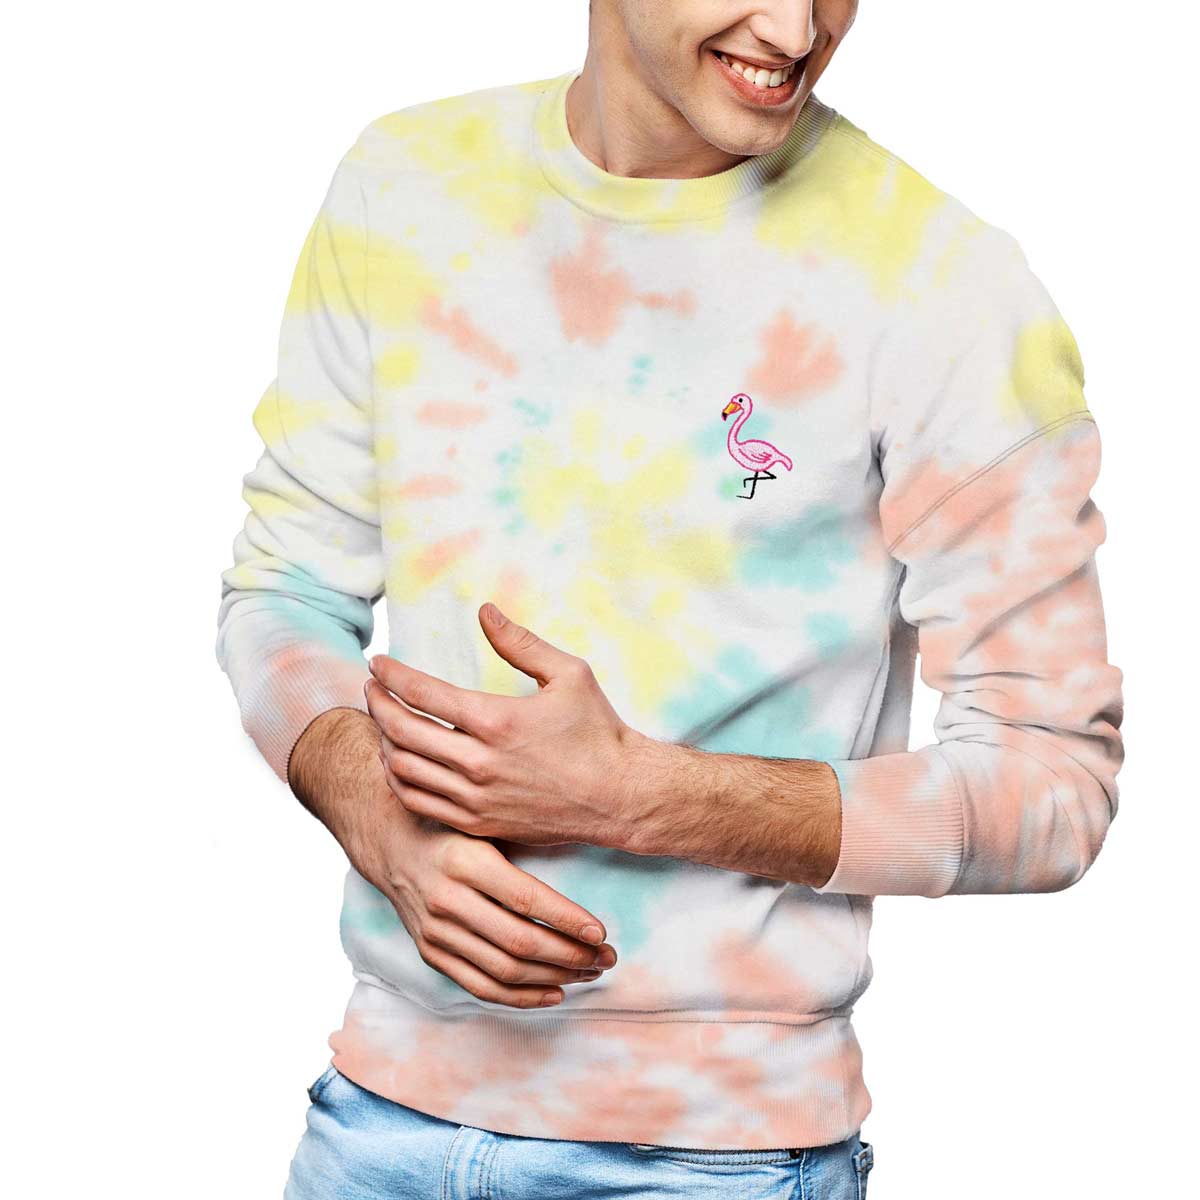 Dalix Flamingo Sweatshirt